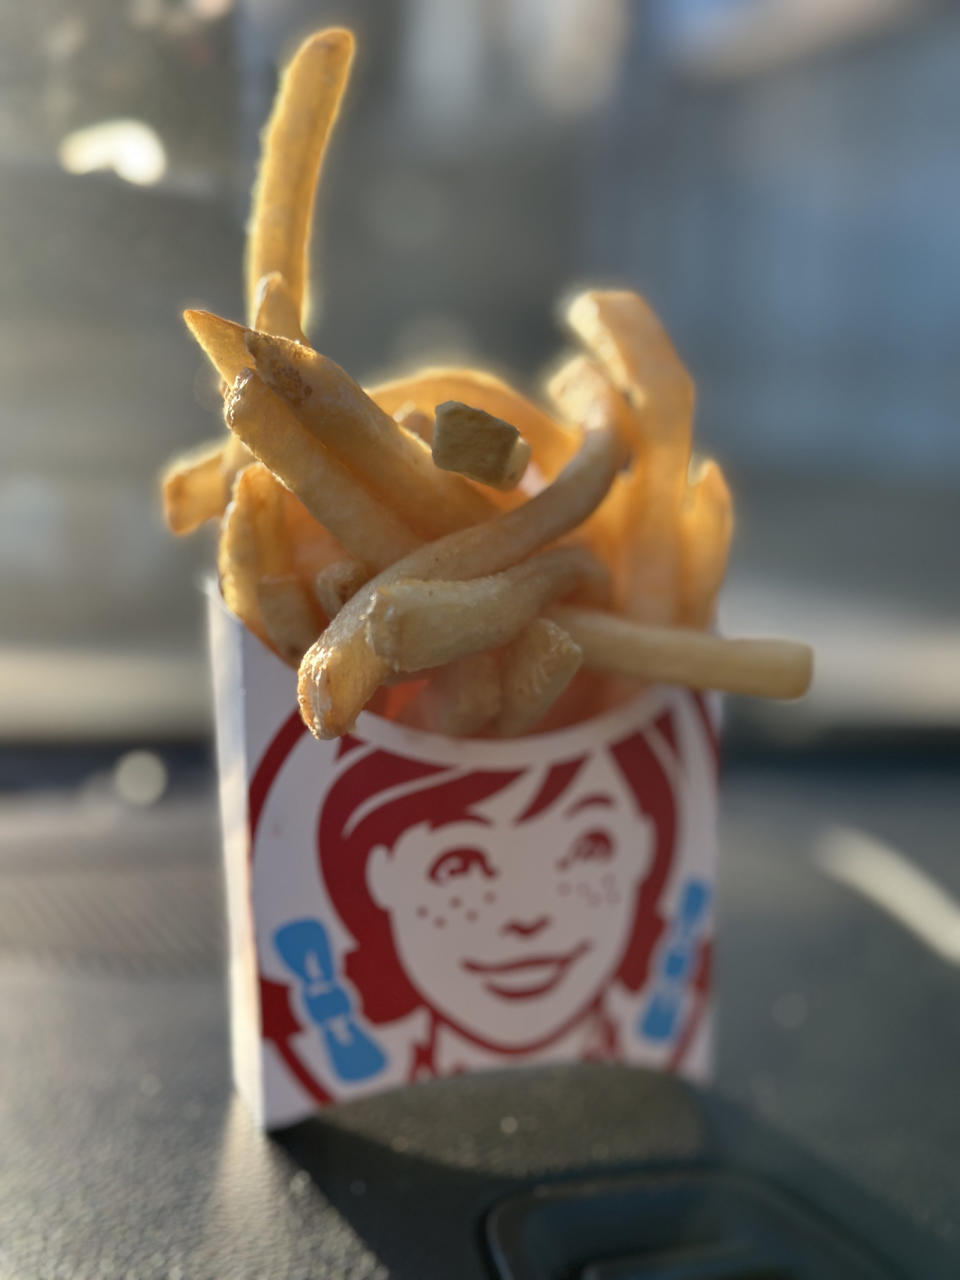 Wendy's fries